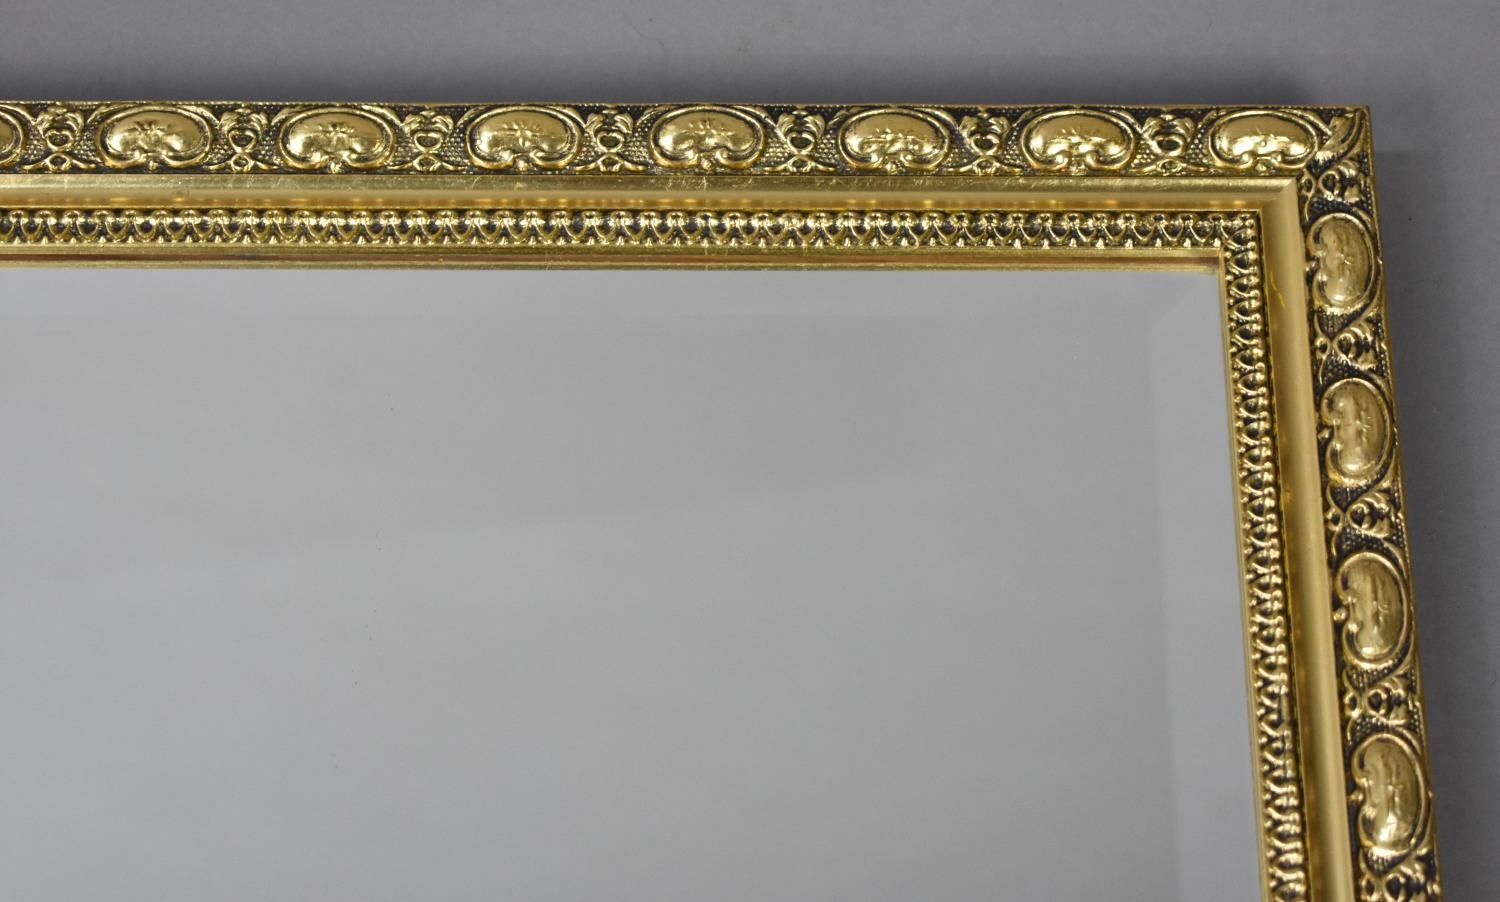 A Modern Bevel Edged Gilt Framed Rectangular Wall Mirror, 93x62cms Overall - Image 2 of 2